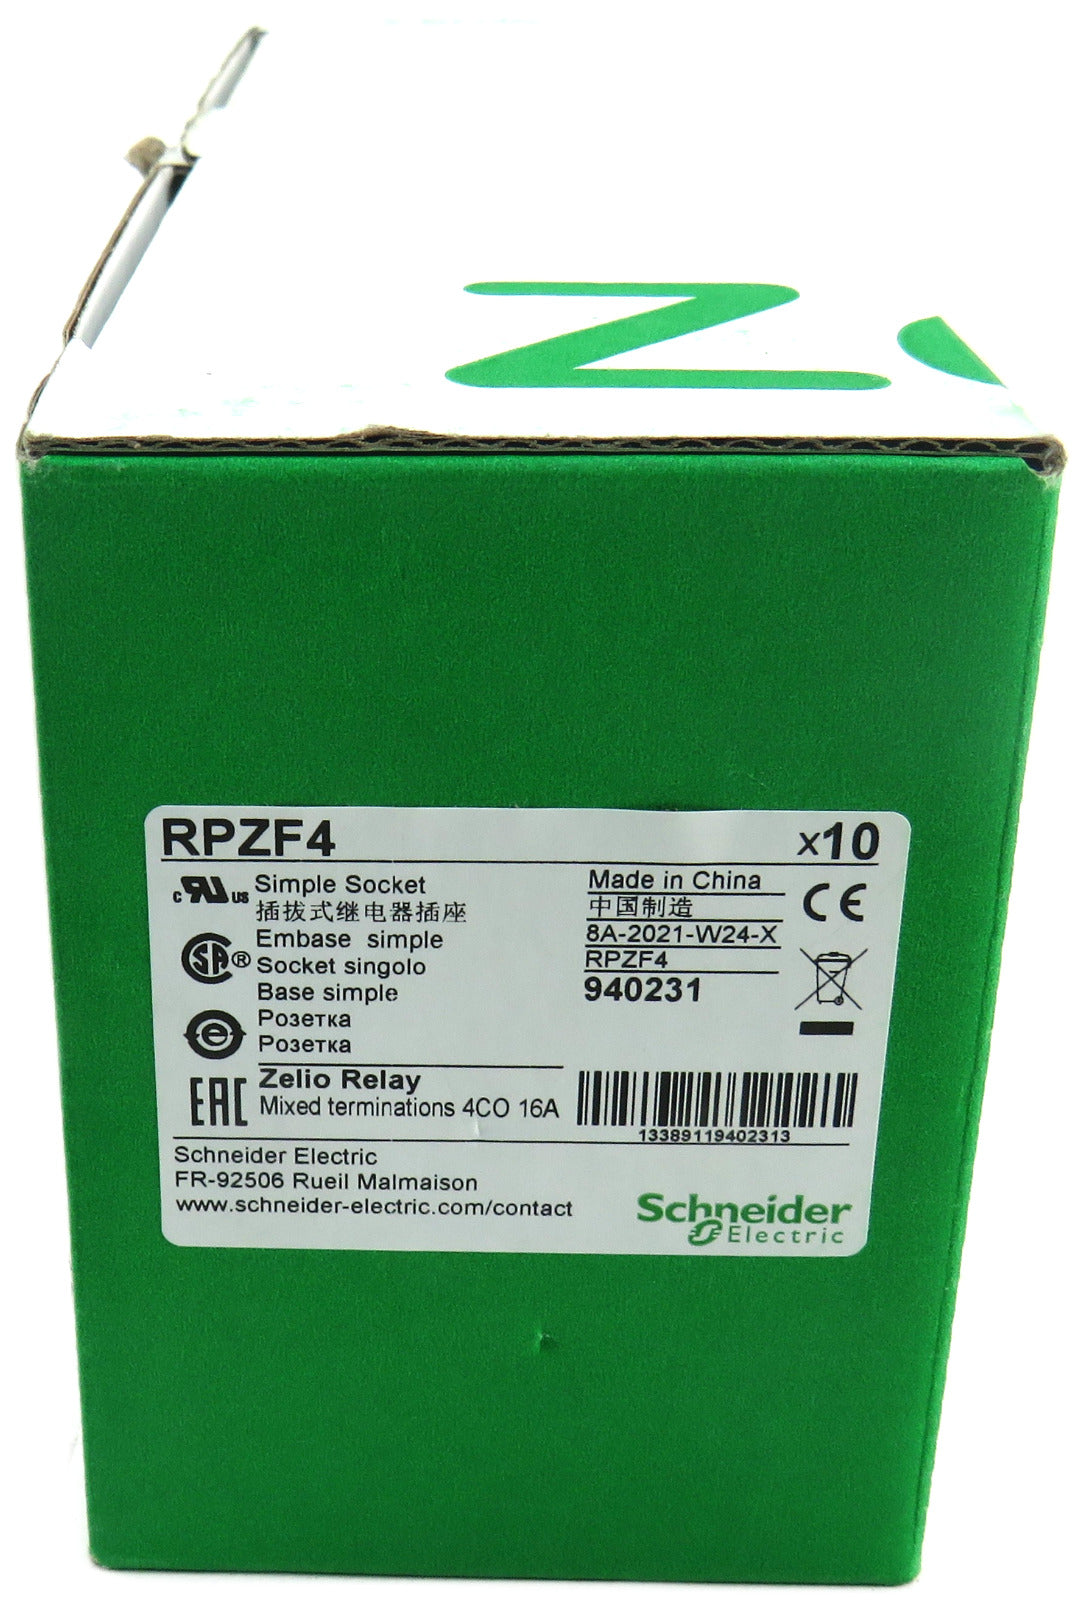 SCHNEIDER RPZF4  Socket Relay 16A   Lot of 10 New